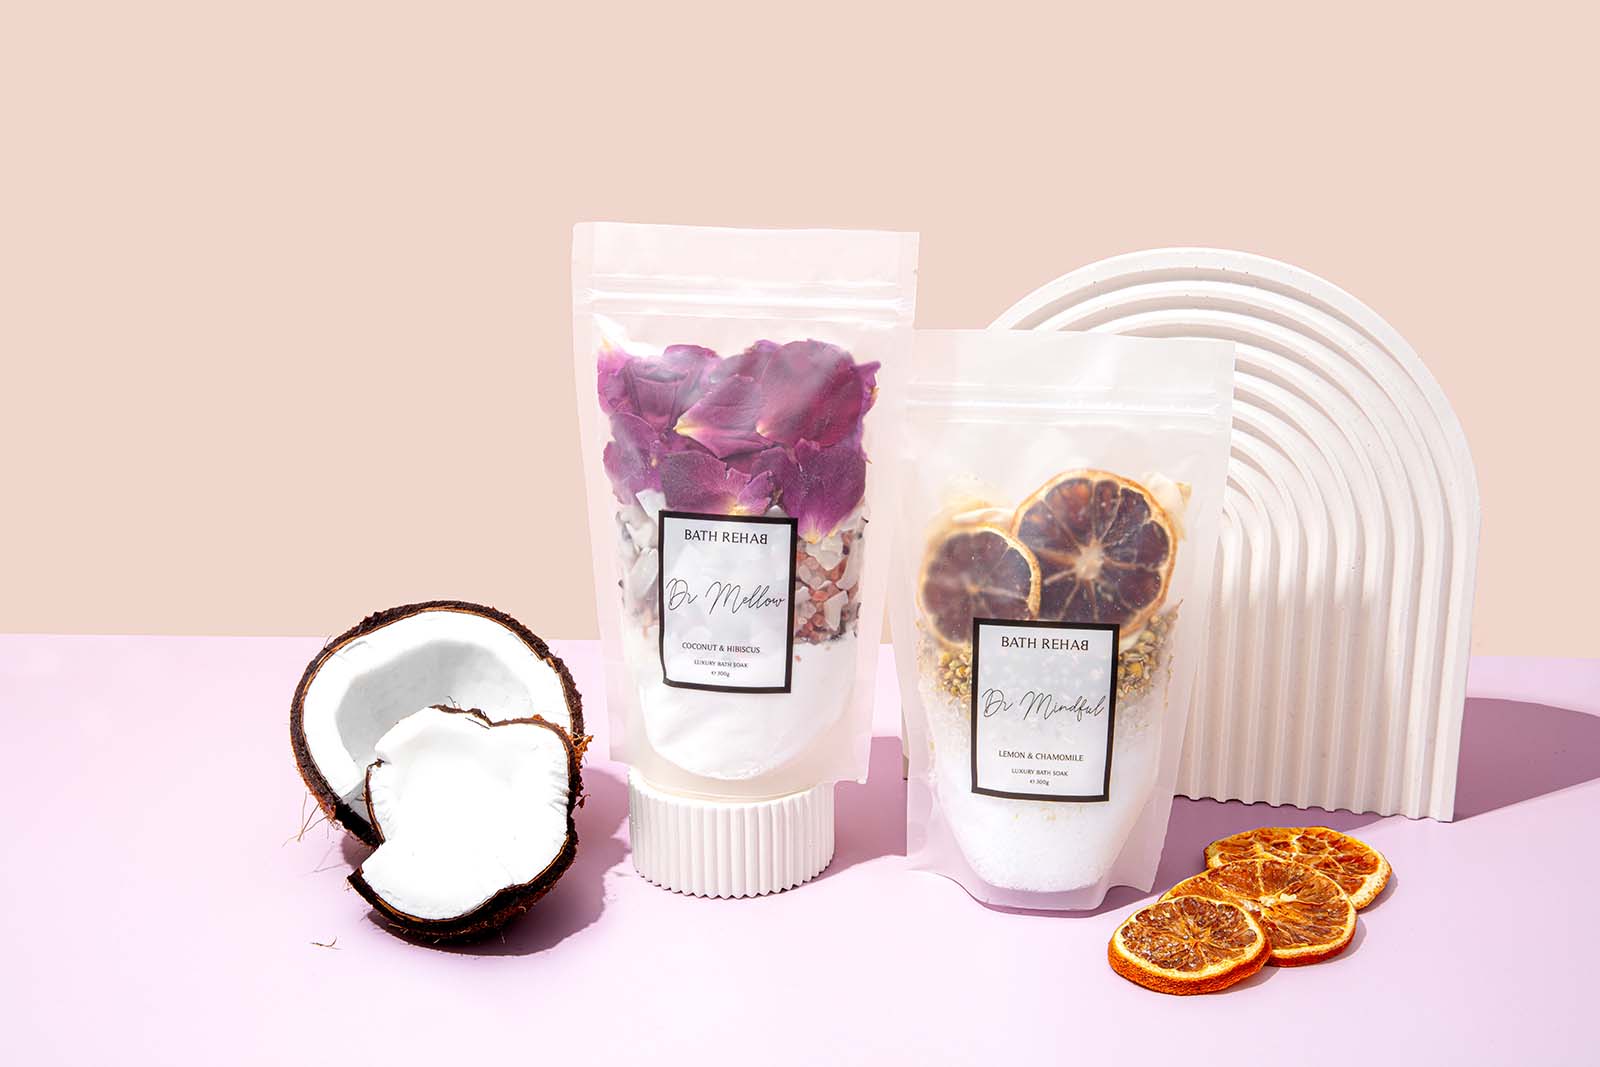 Clean Aesthetic product photos for bath soak brand bath rehab. Styled Product Stills by Colourpop Studio 